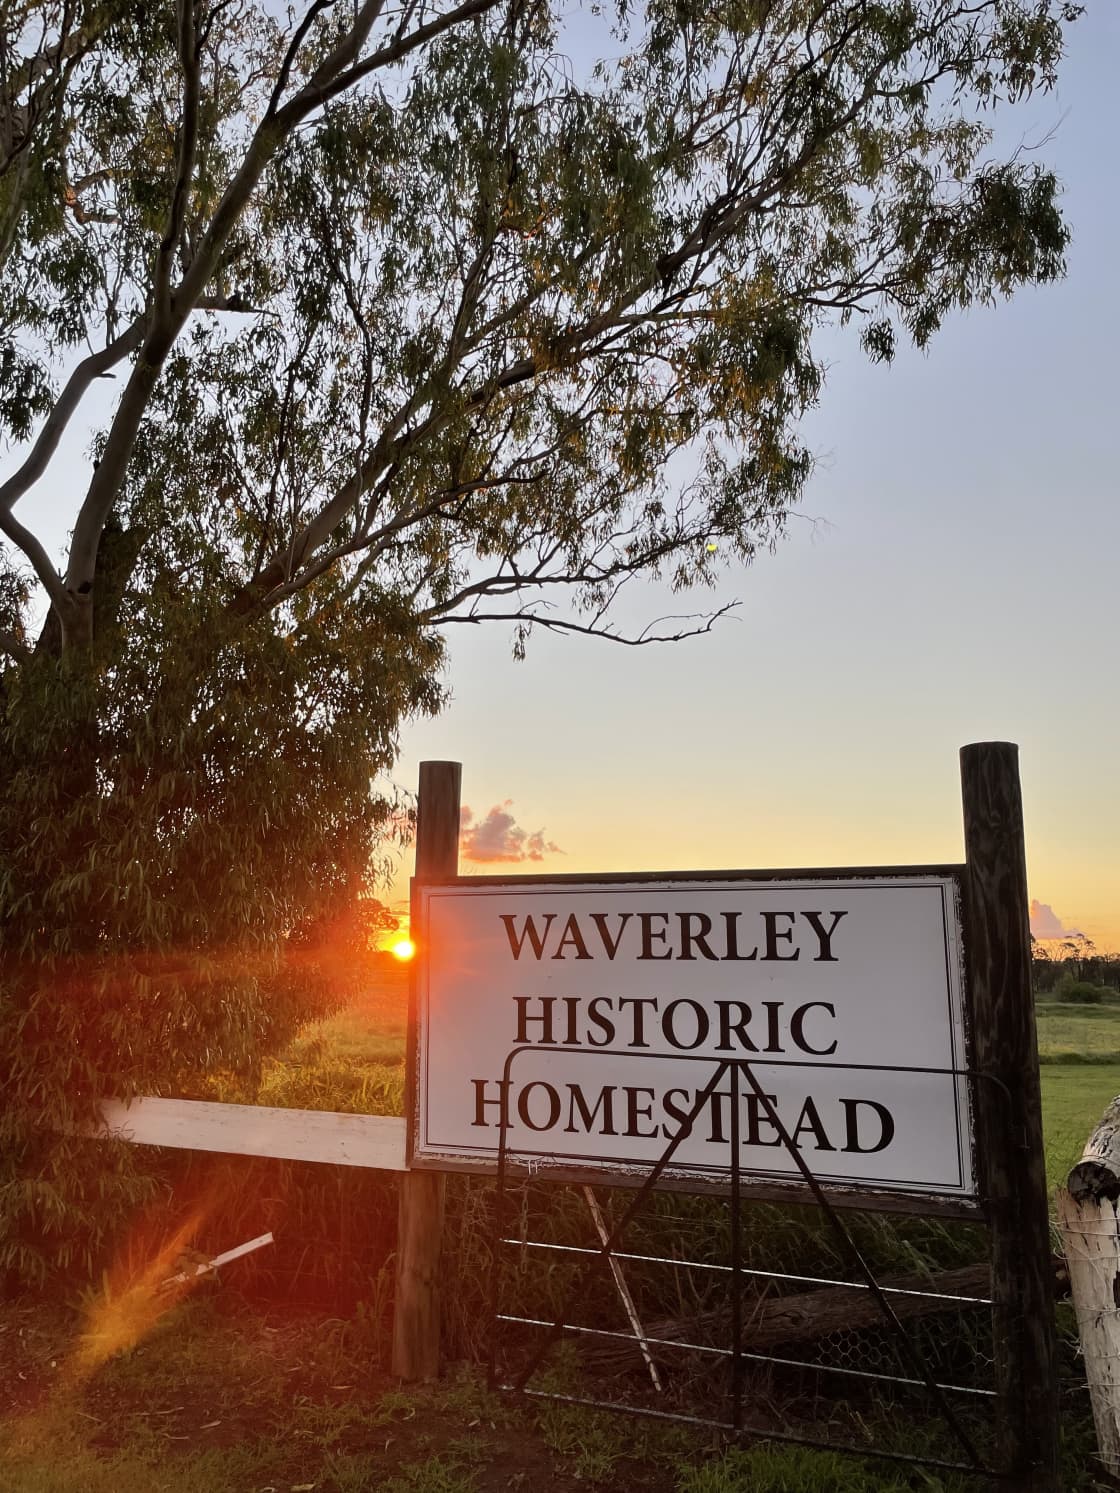 Waverley Historical Homestead